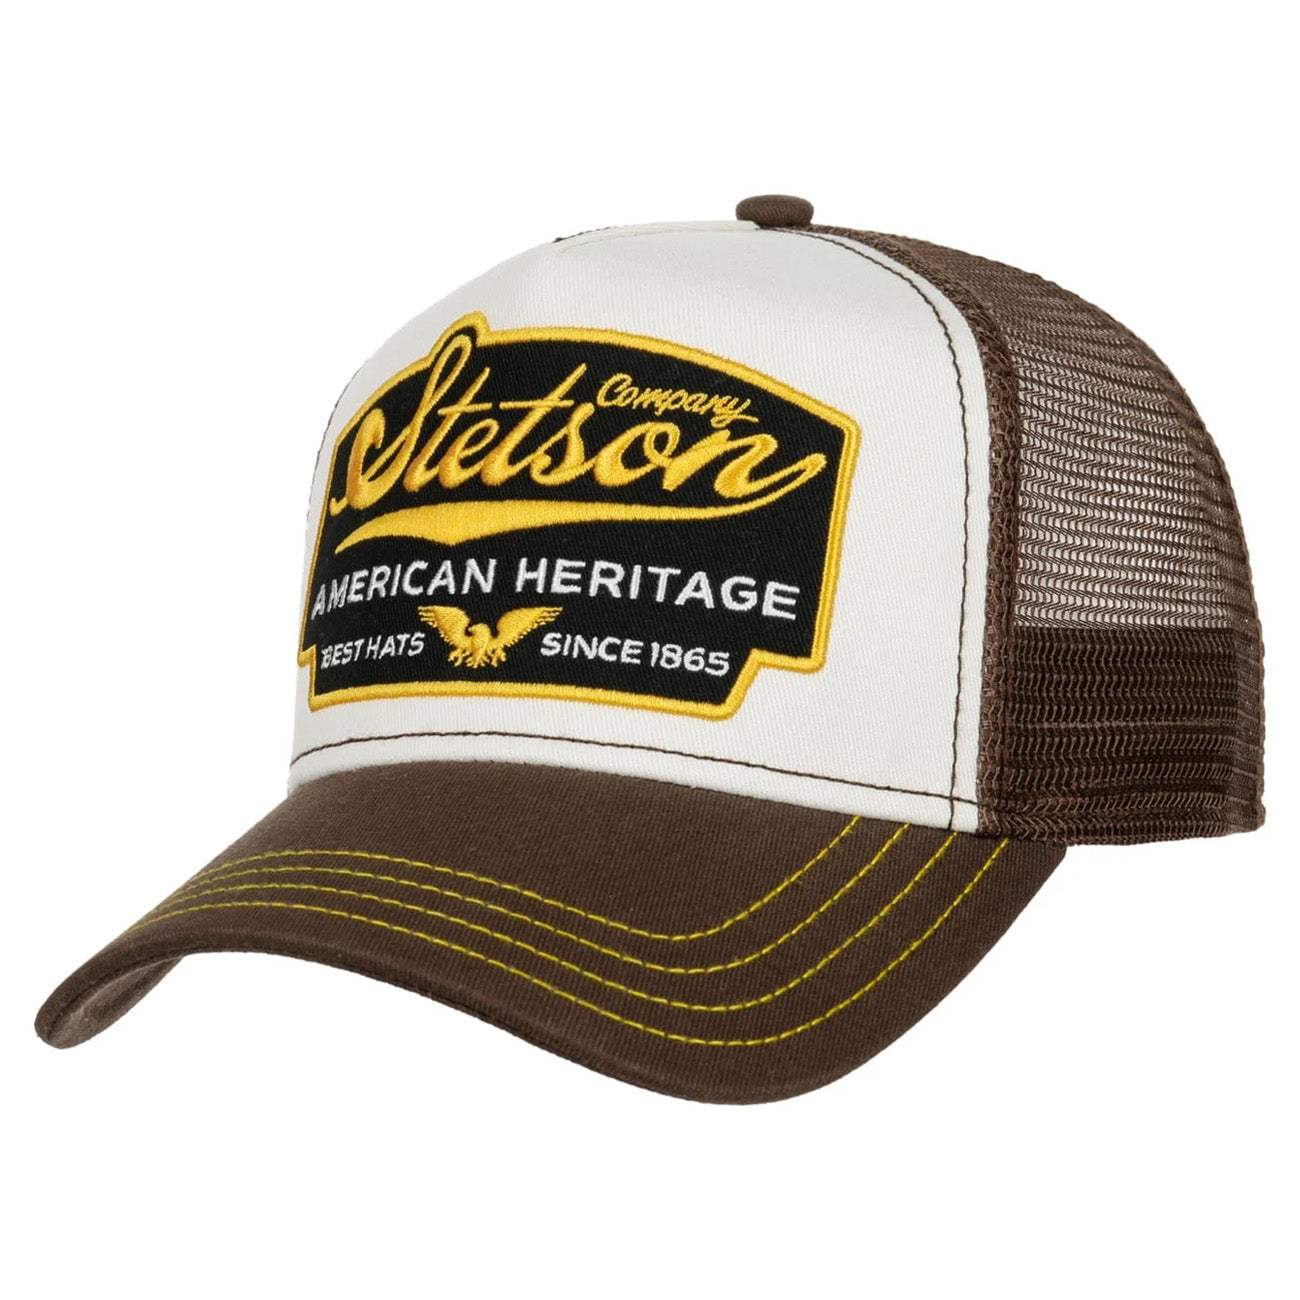 Stetson American Heritage Trucker Cap - Brown/White